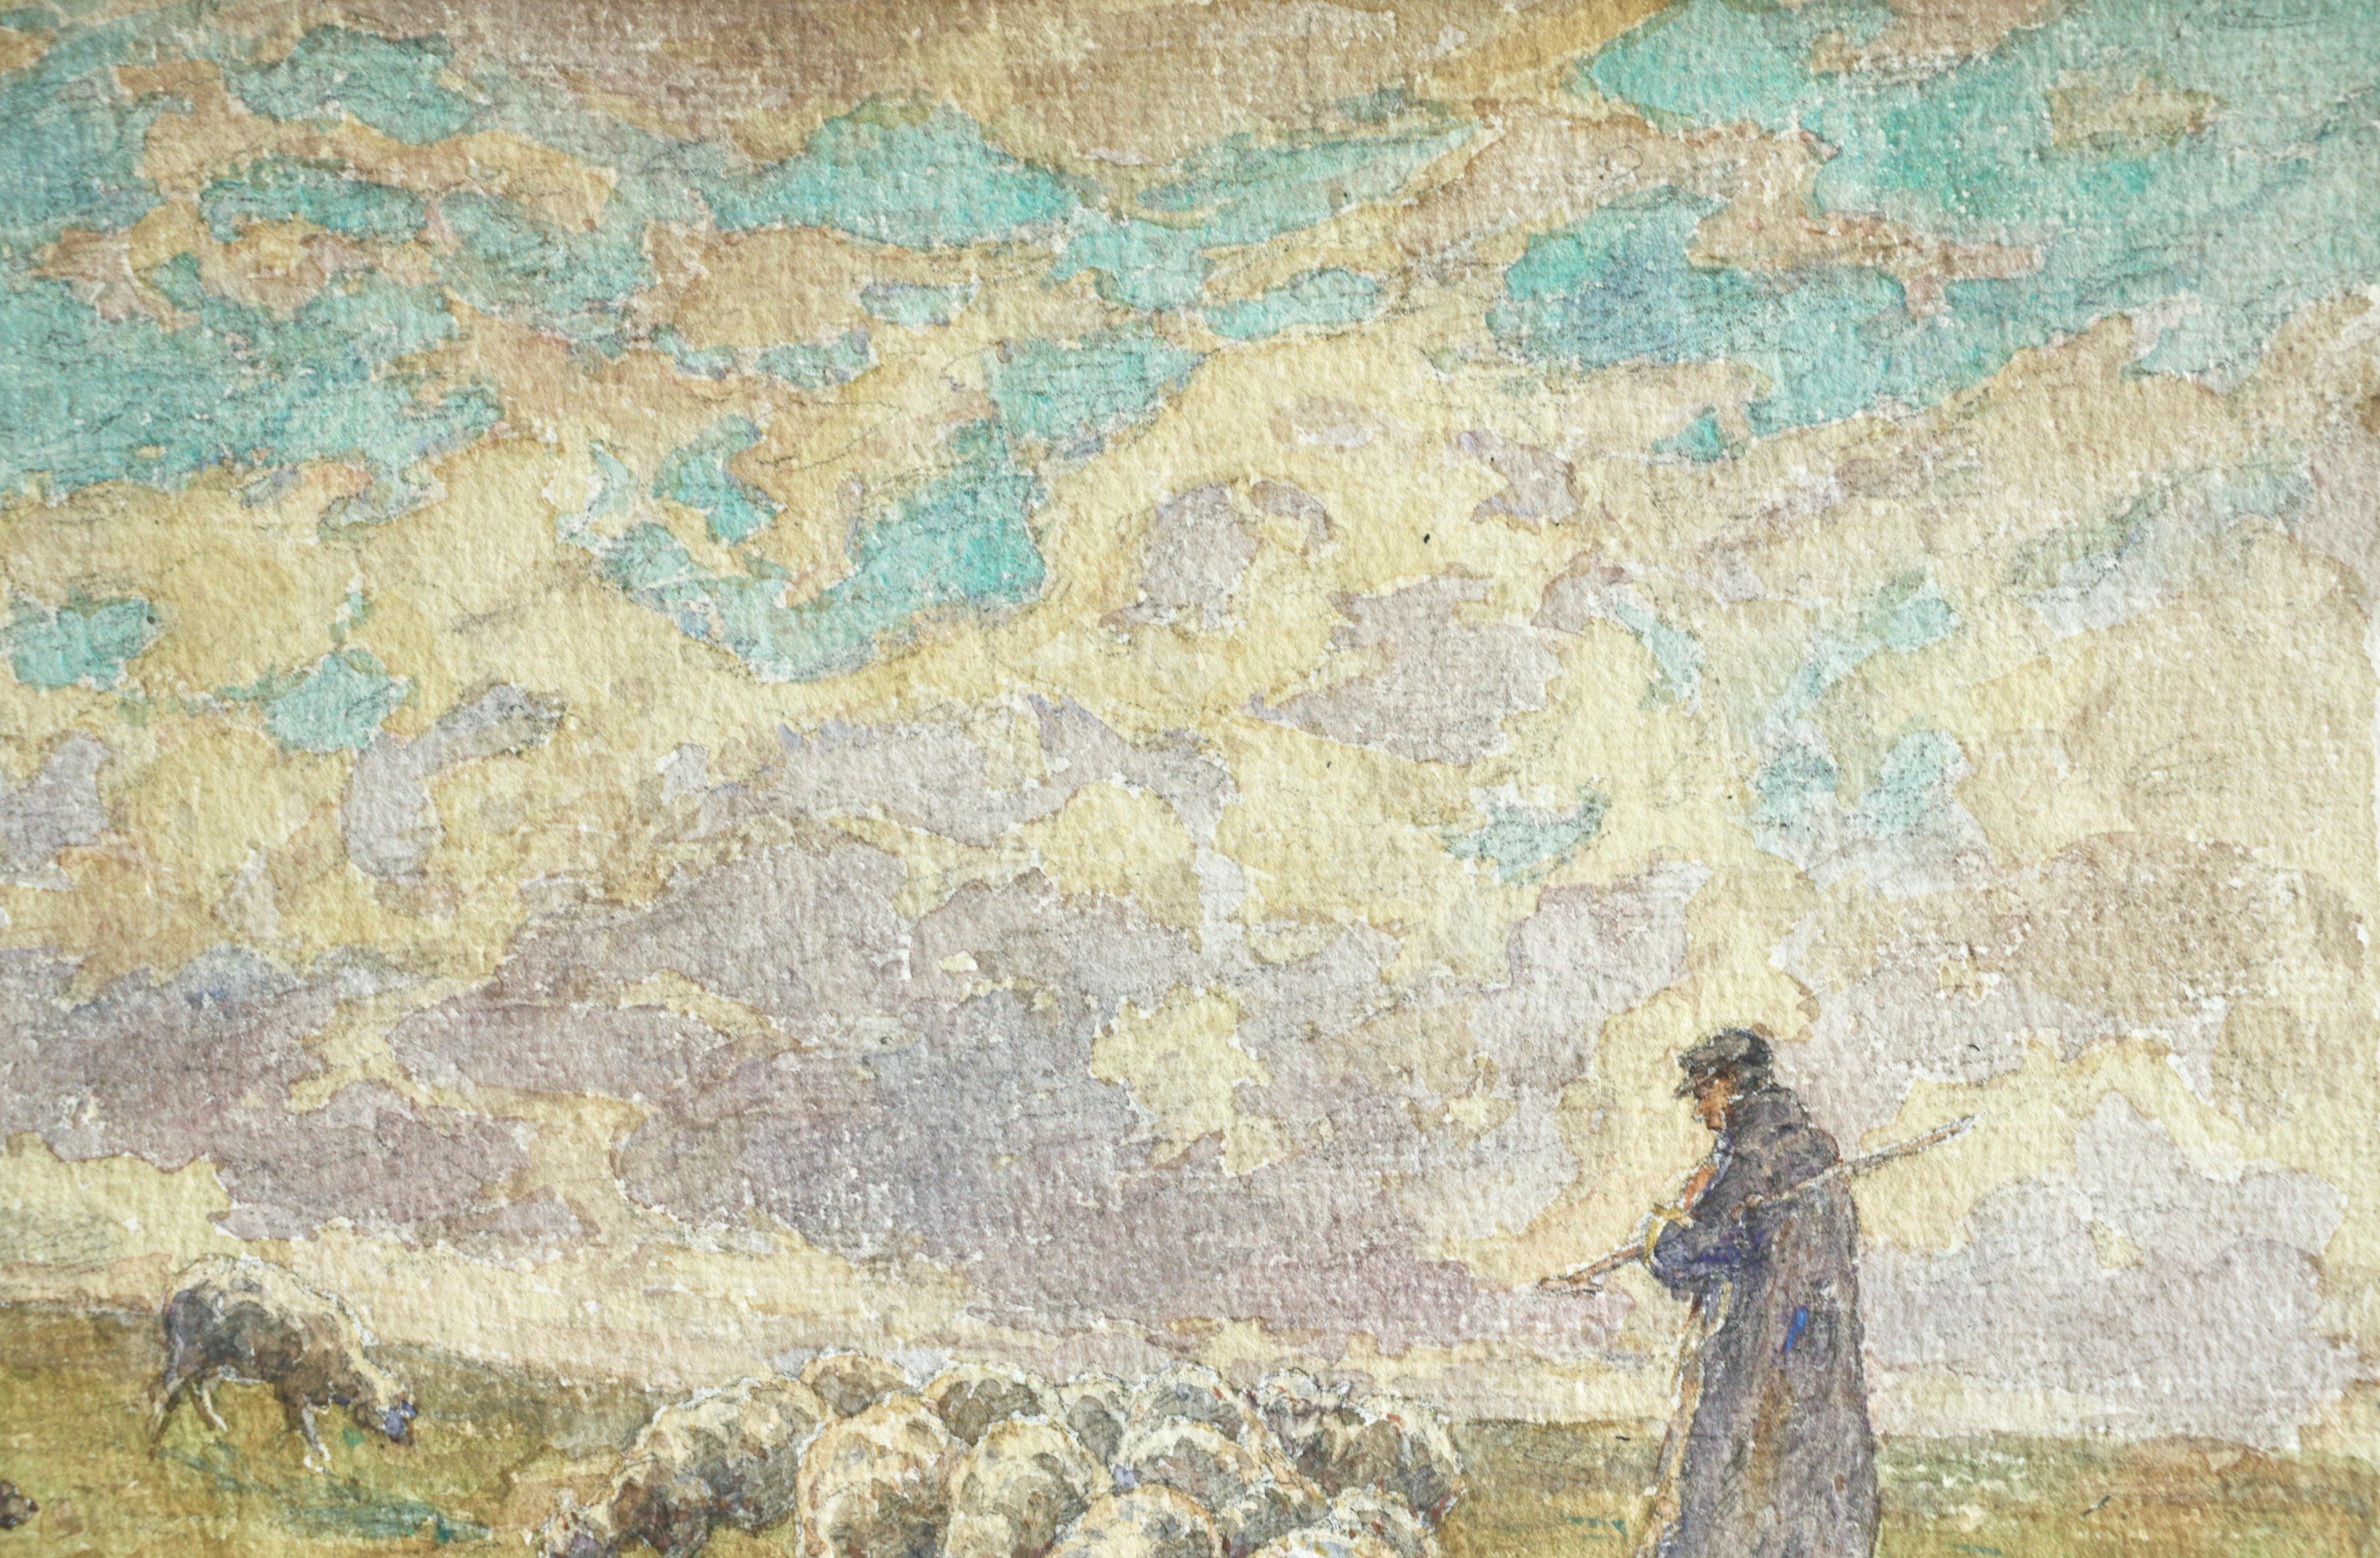 Sheep Droving - 19th Century Watercolor, Shepherd & Flock in Landscape by Duhem - Beige Landscape Art by Henri Duhem